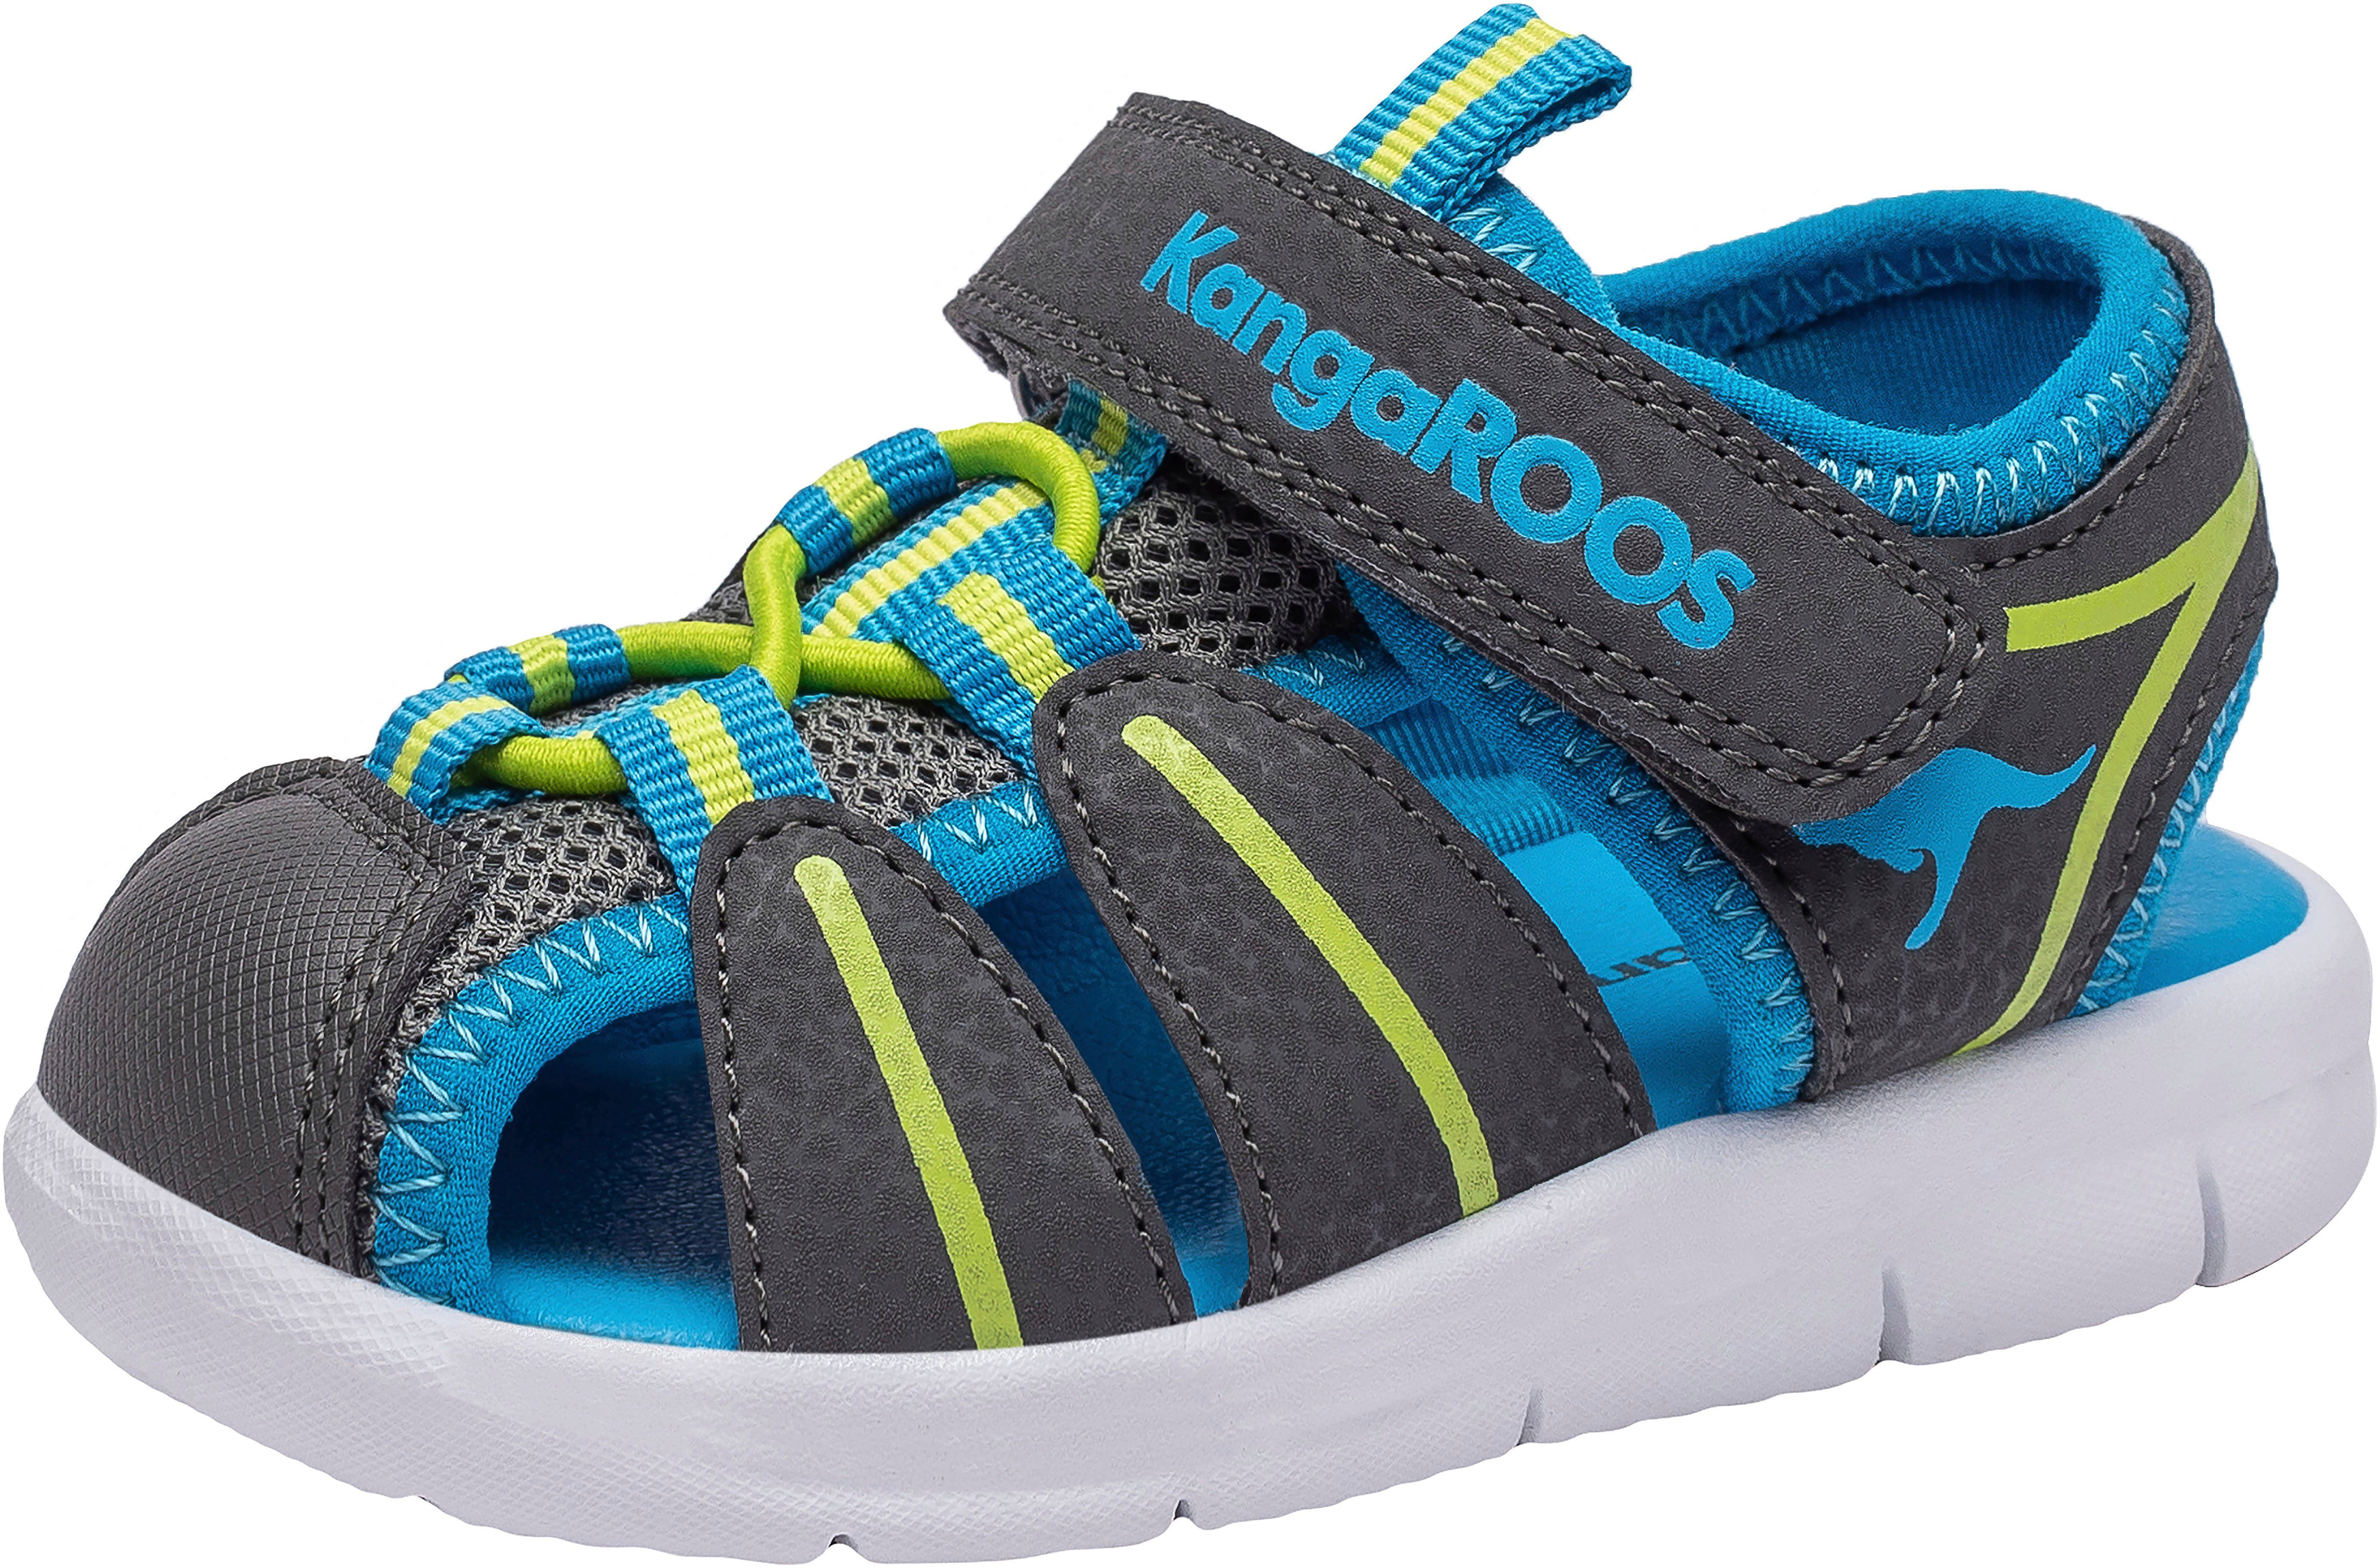 KangaROOS K-Grobi Sandale mit Klettverschluss grau | Riemchensandalen